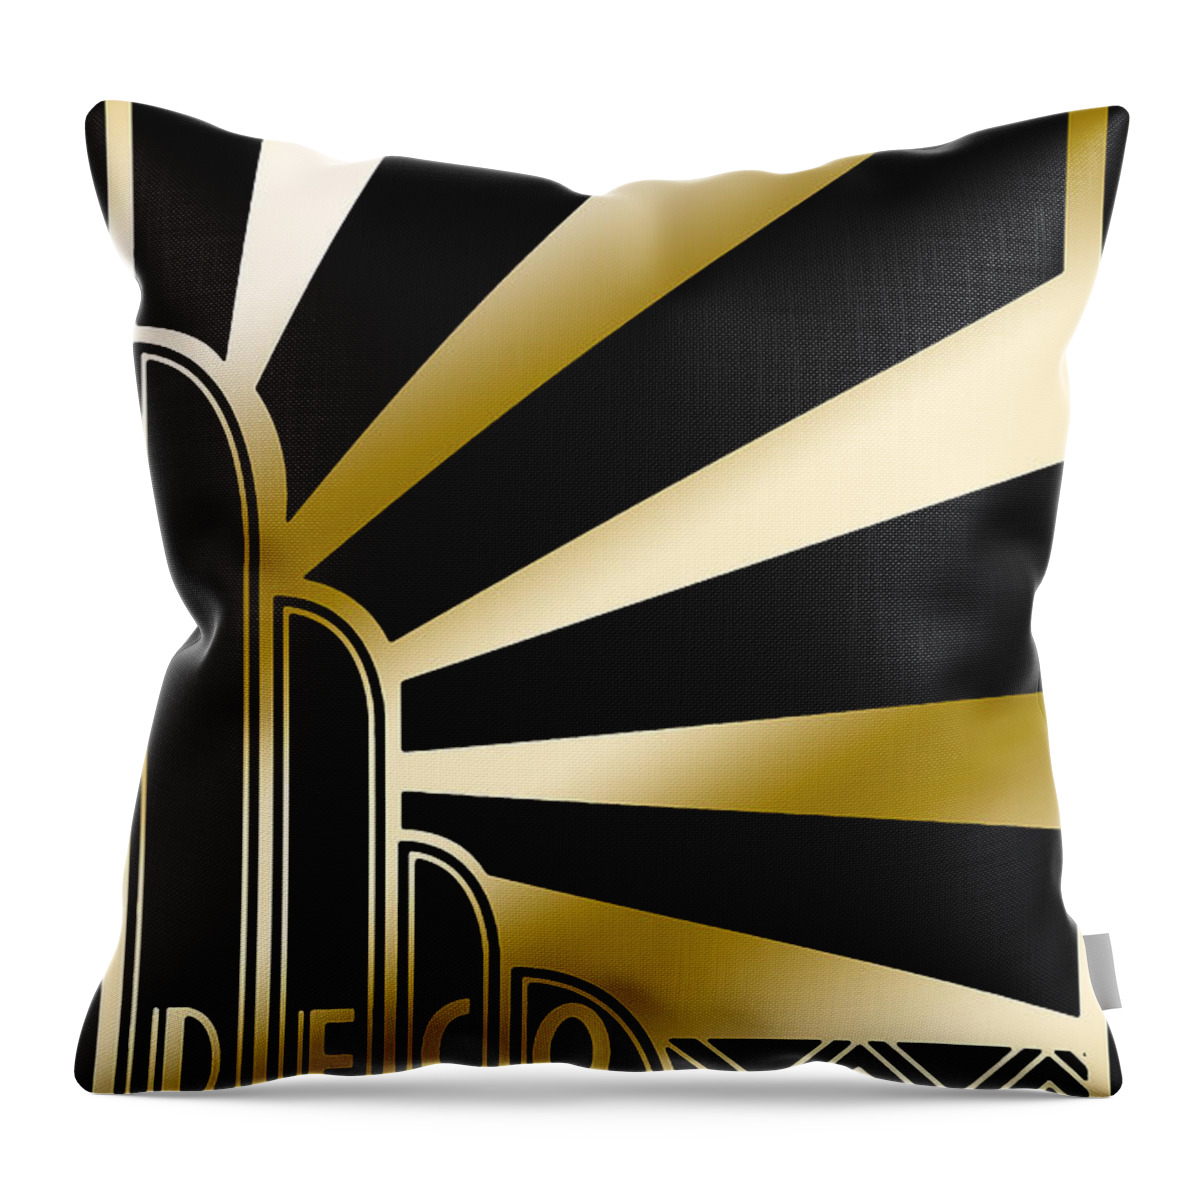 Art Deco Throw Pillow featuring the digital art Art Deco Poster 2019 by Chuck Staley